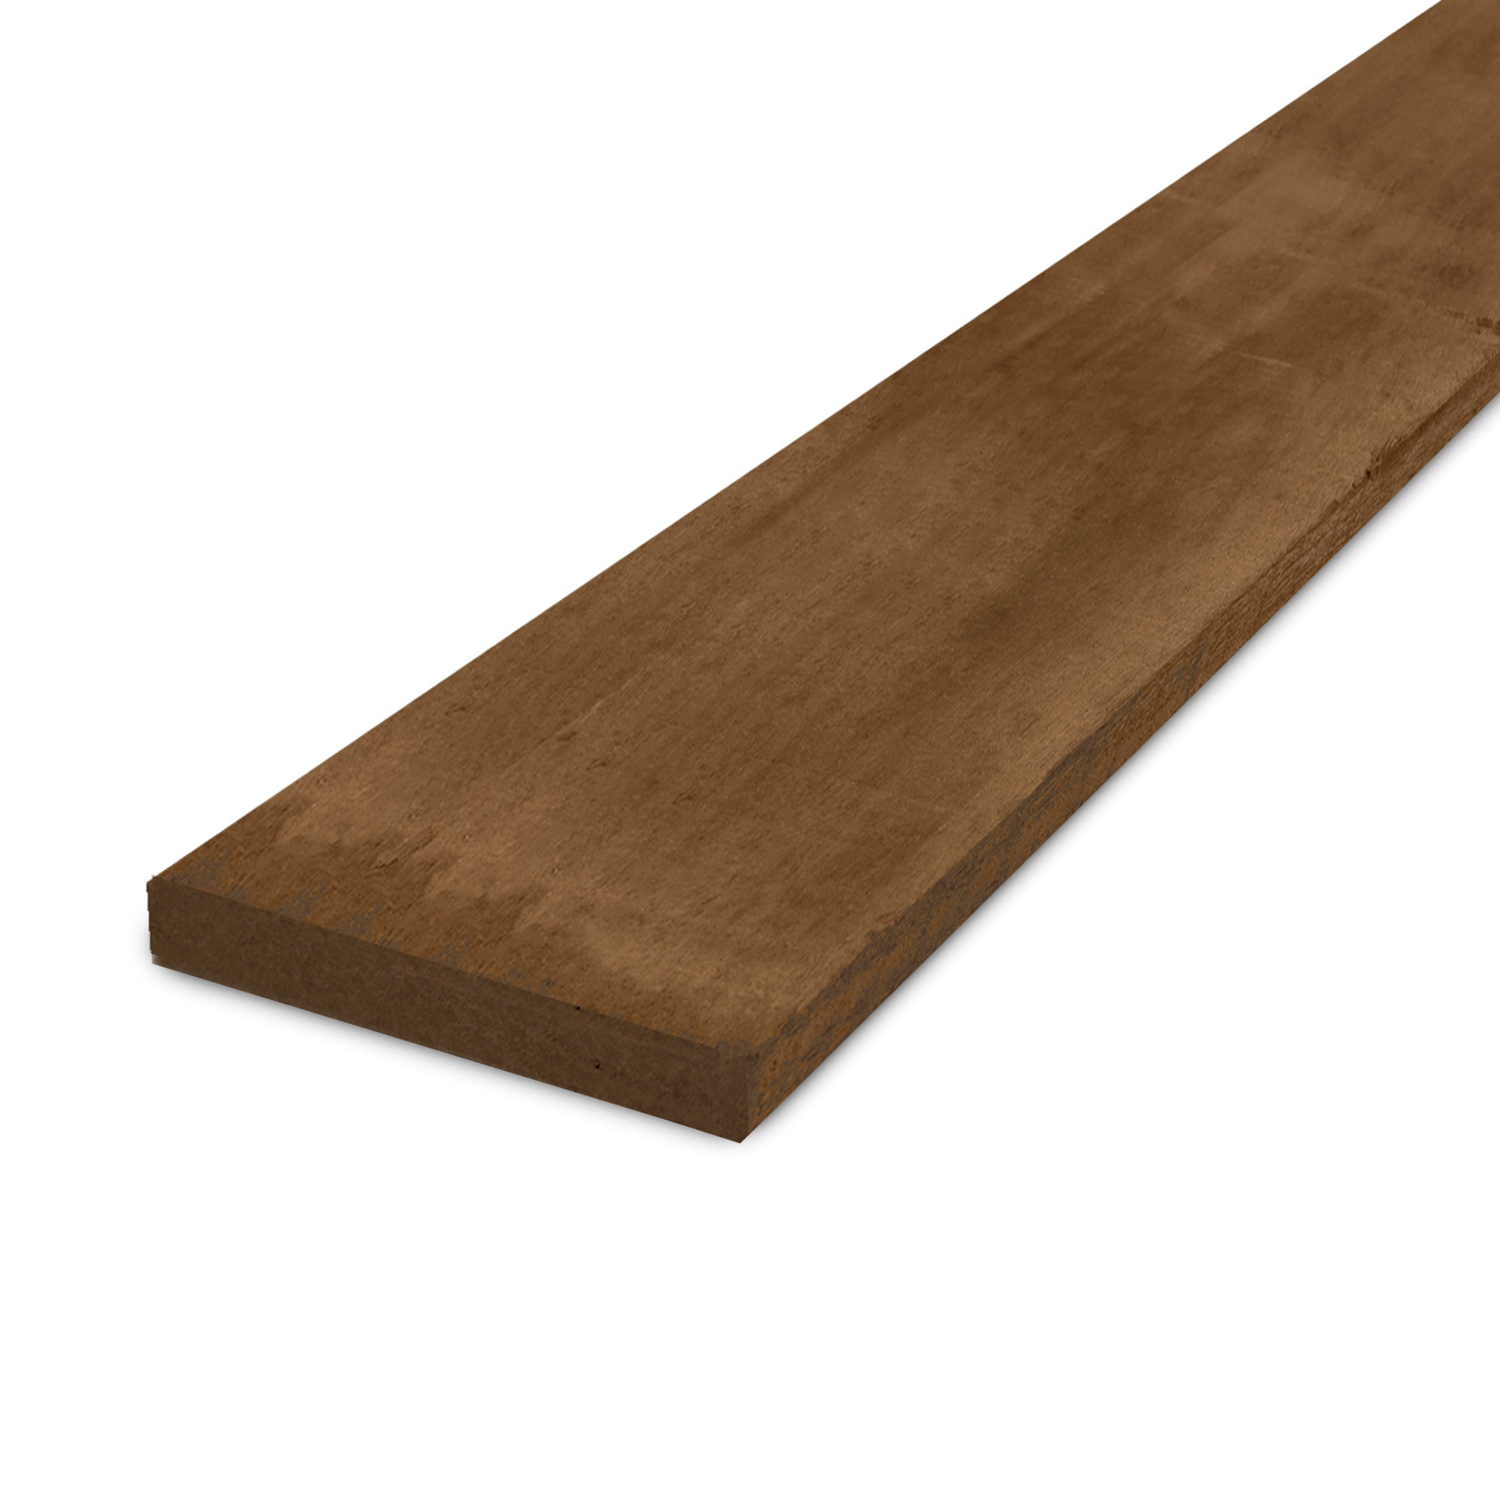  Ipé plank 26x155mm fijnbezaagd (ruw) IPE hardhout